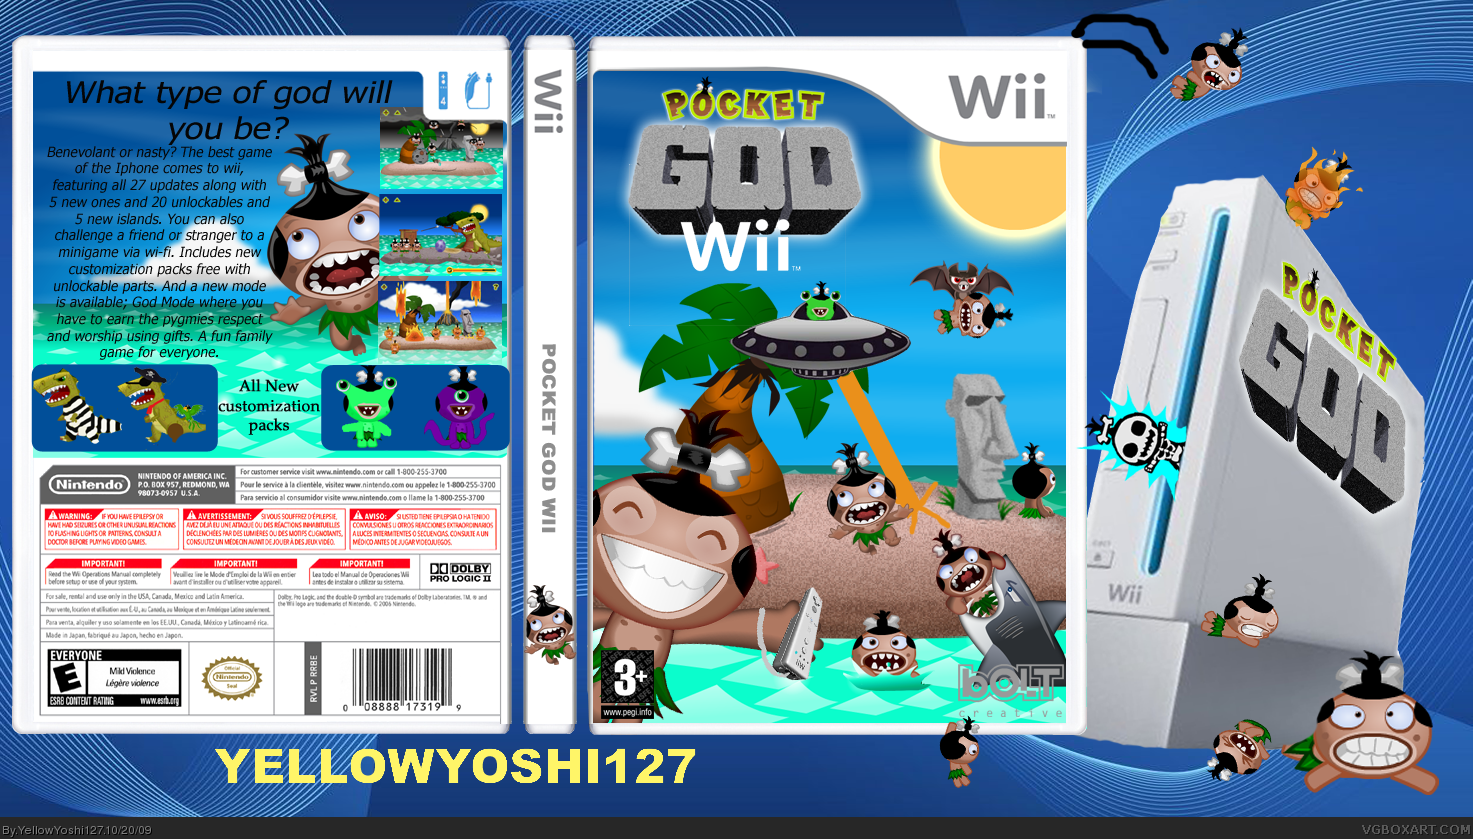 Pocket God Wii box cover